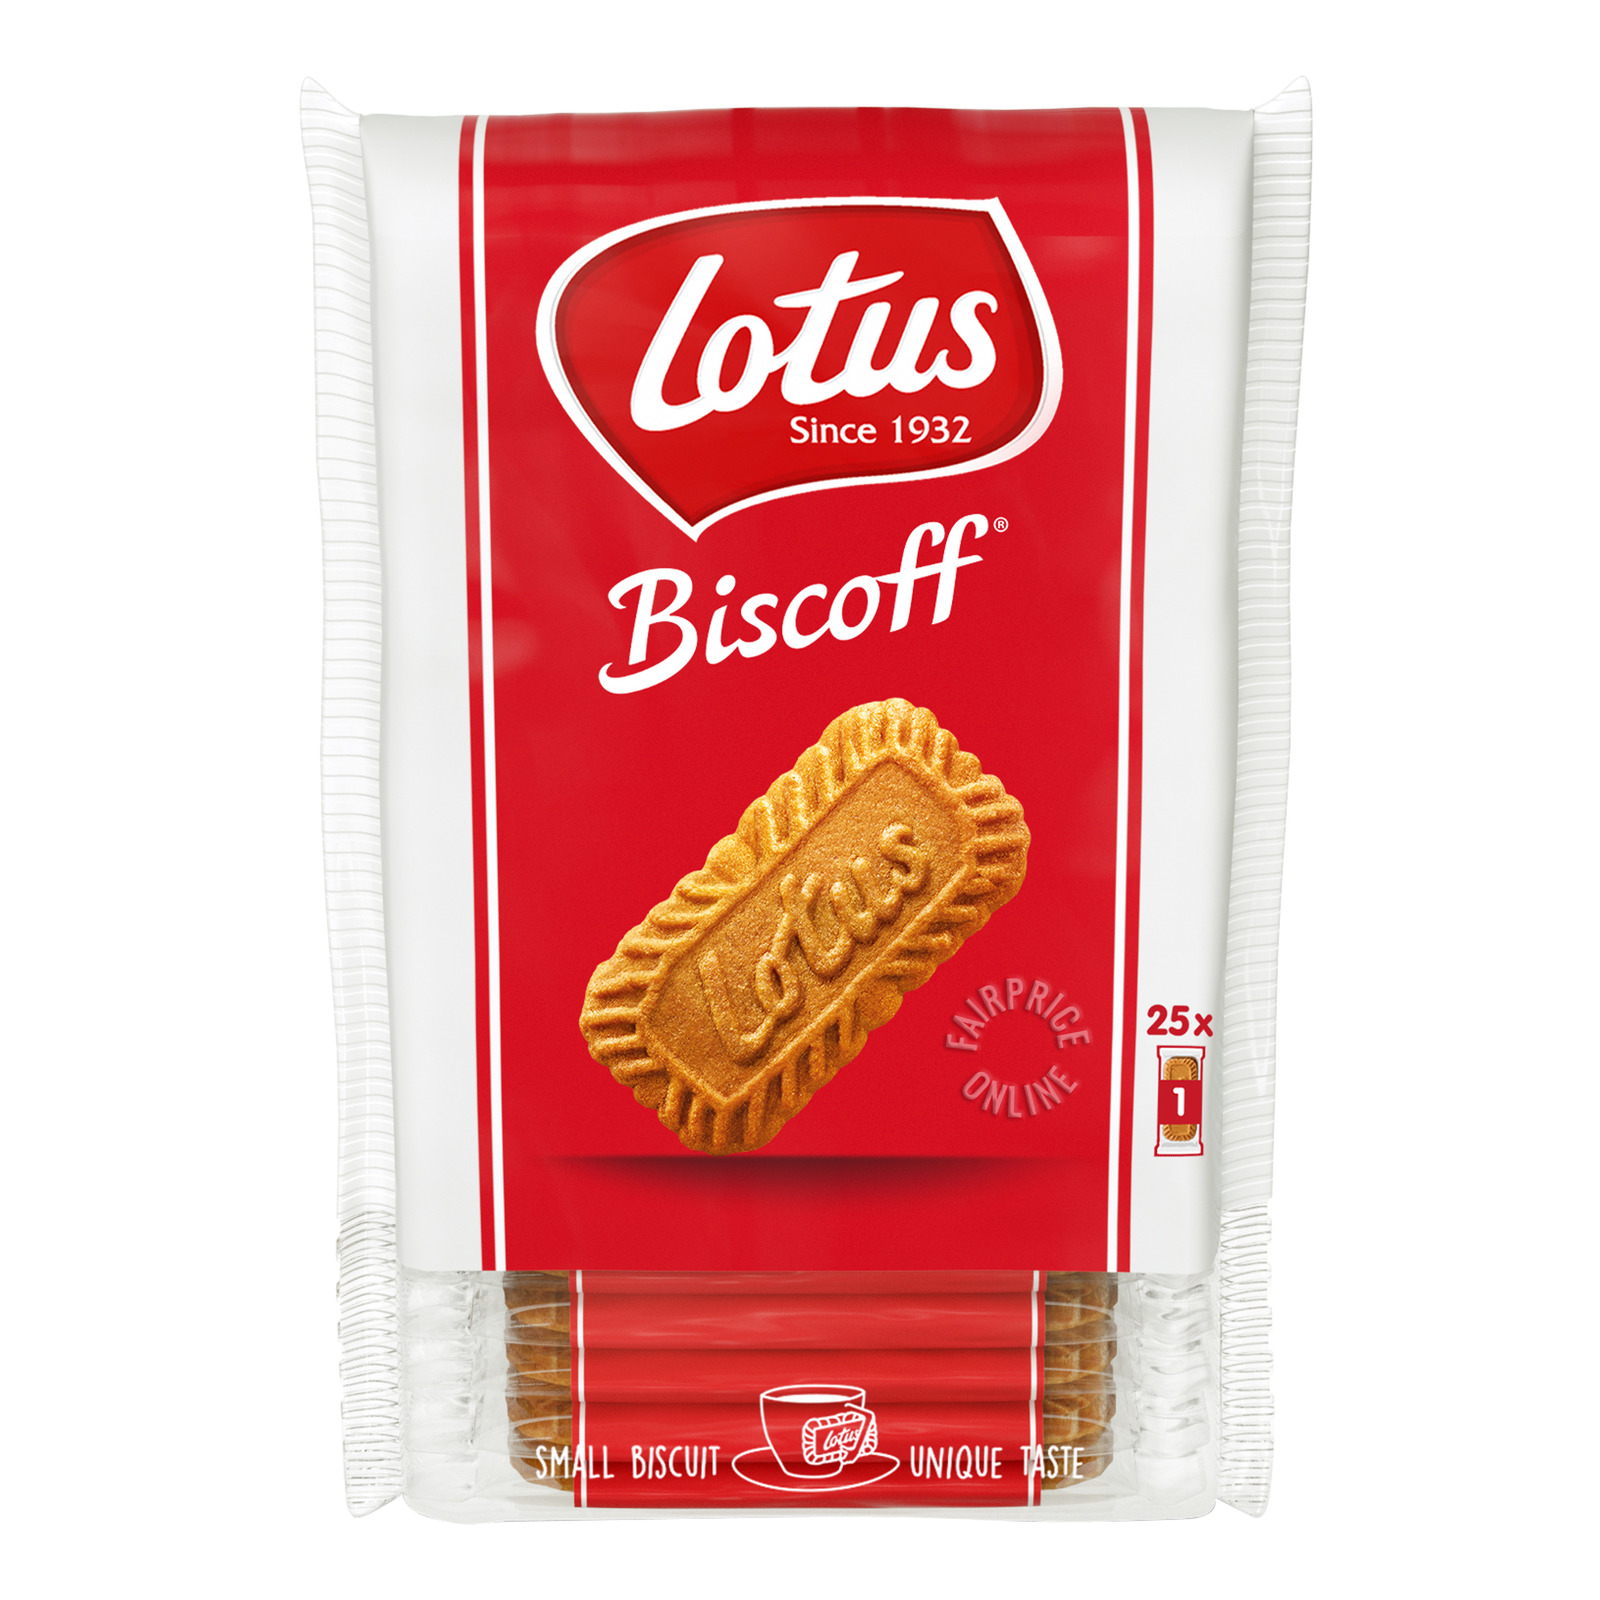 Lotus Biscoff Biscuit - Original Caramalised